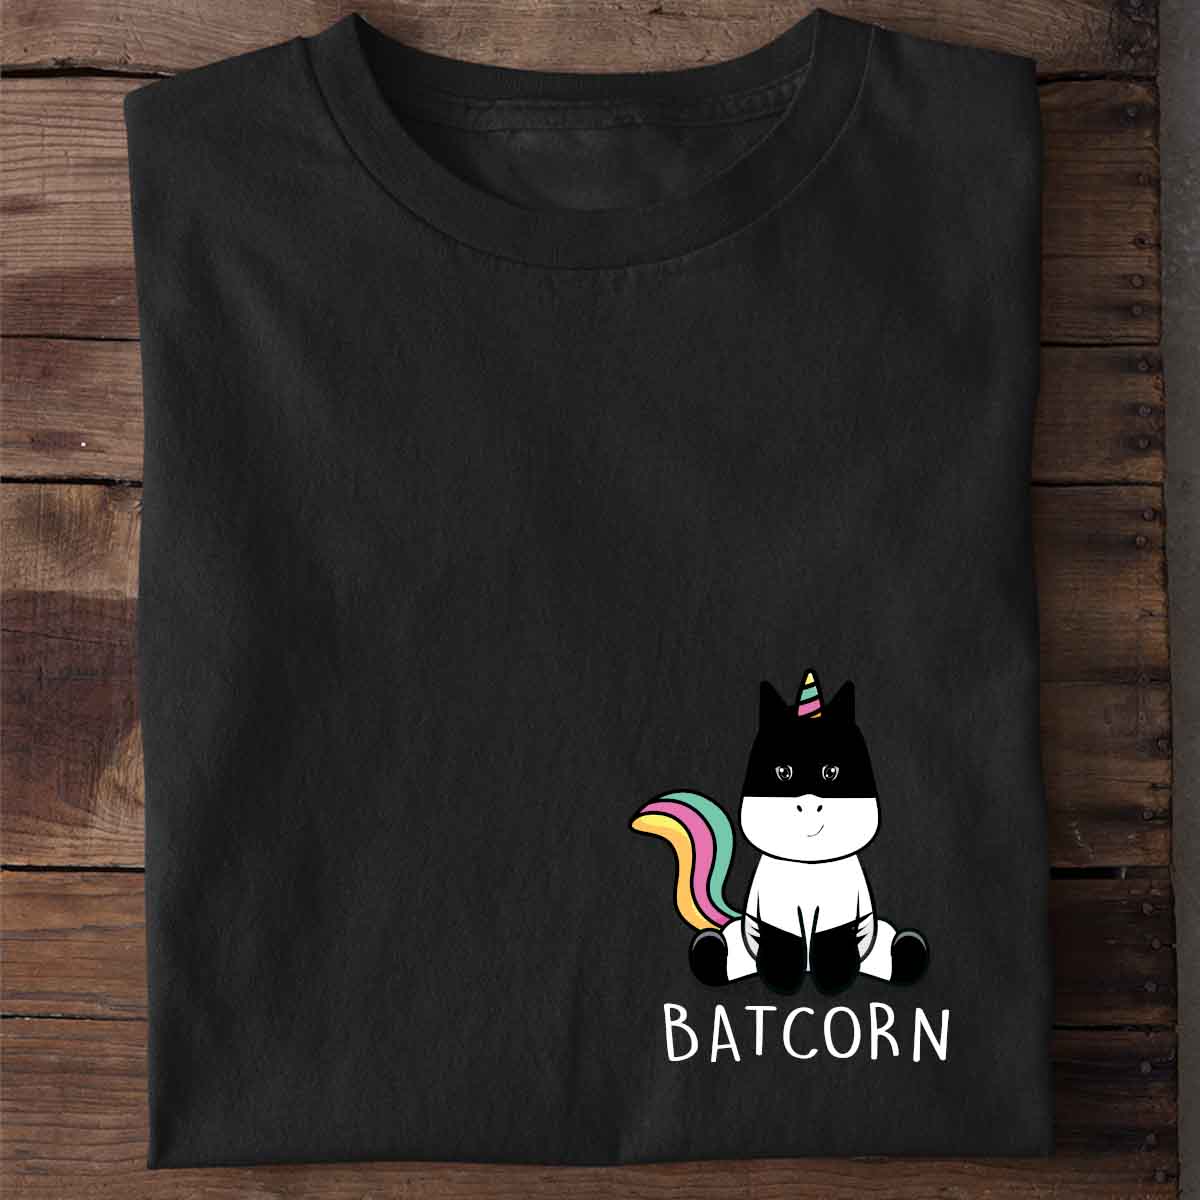 Batcorn - Shirt Unisex Brust